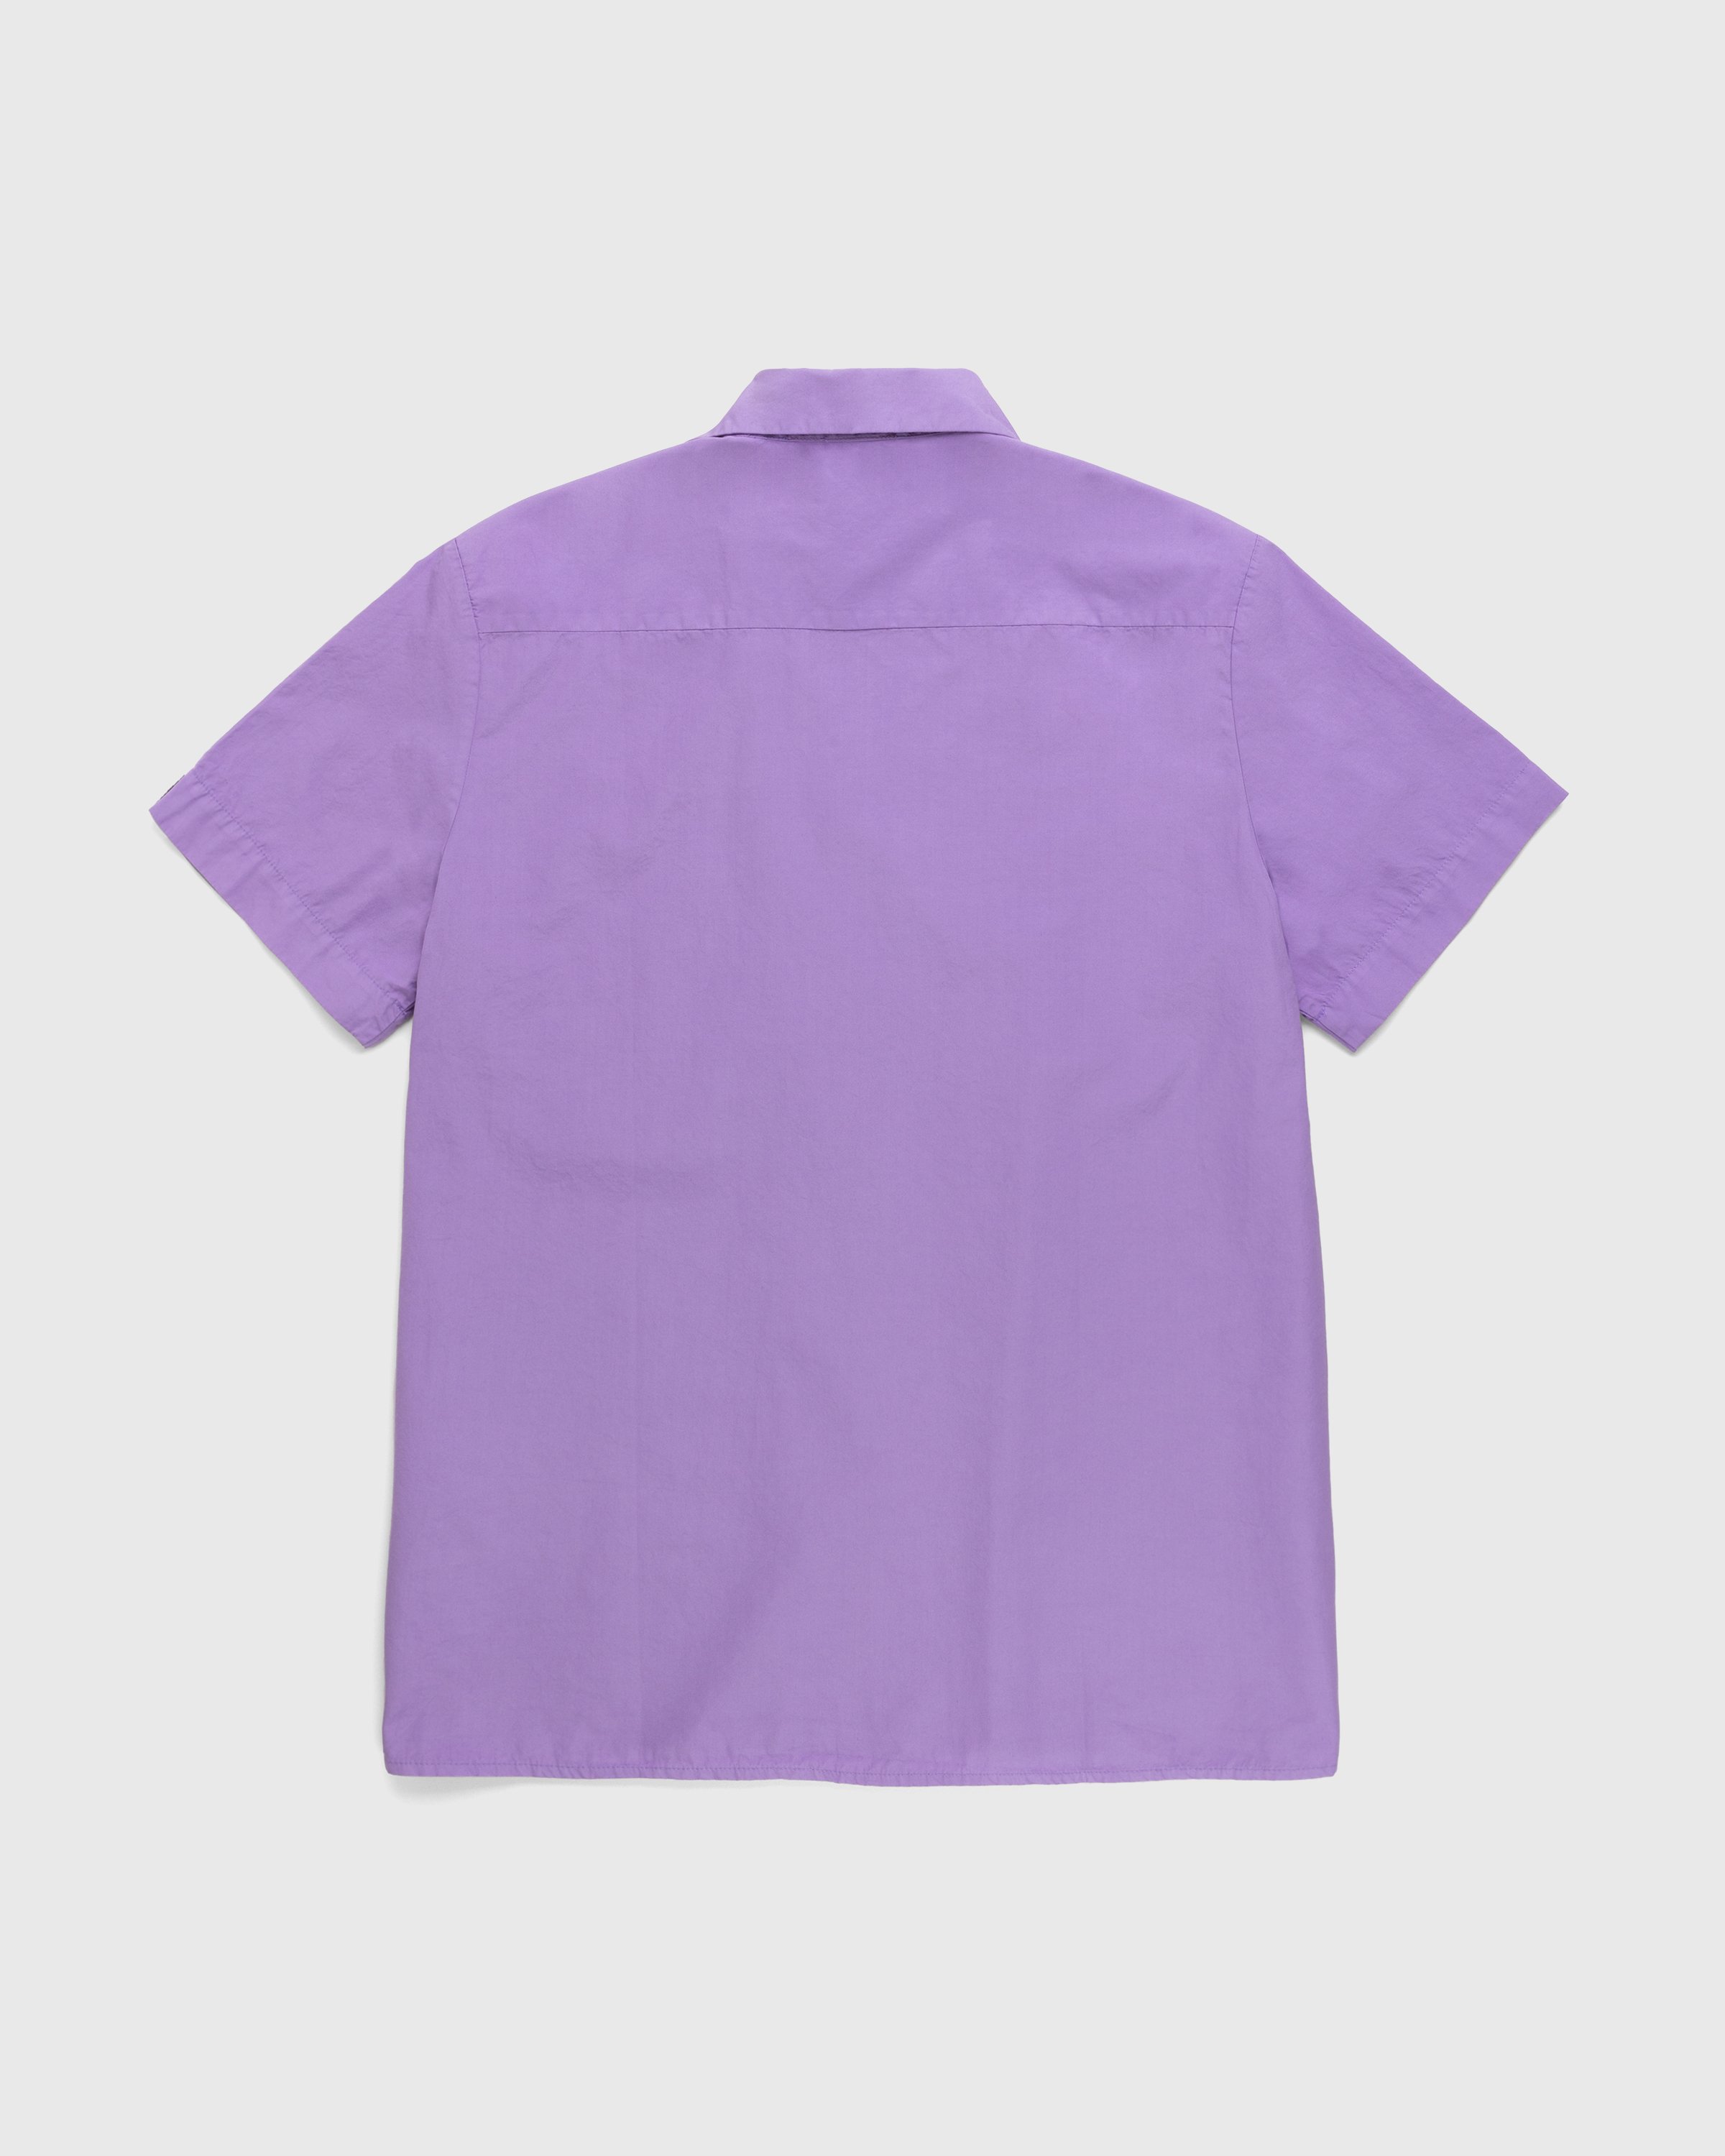 Winnie New York - Cotton Camp Shirt Lavender - Clothing - Purple - Image 2